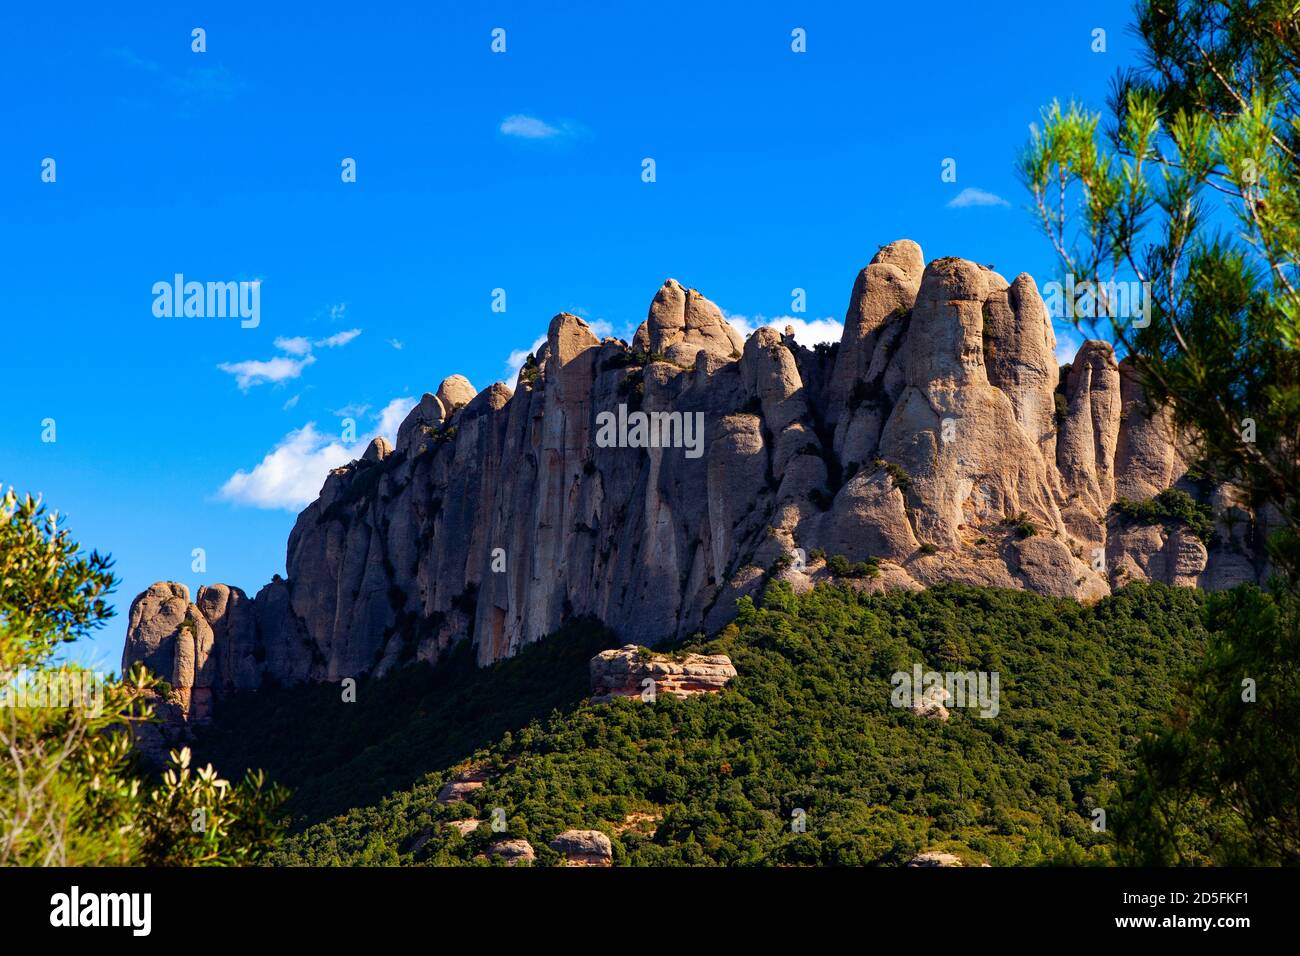 The mountain of Montserrat, near Barcelona, Catalonia, Spain Stock Photo